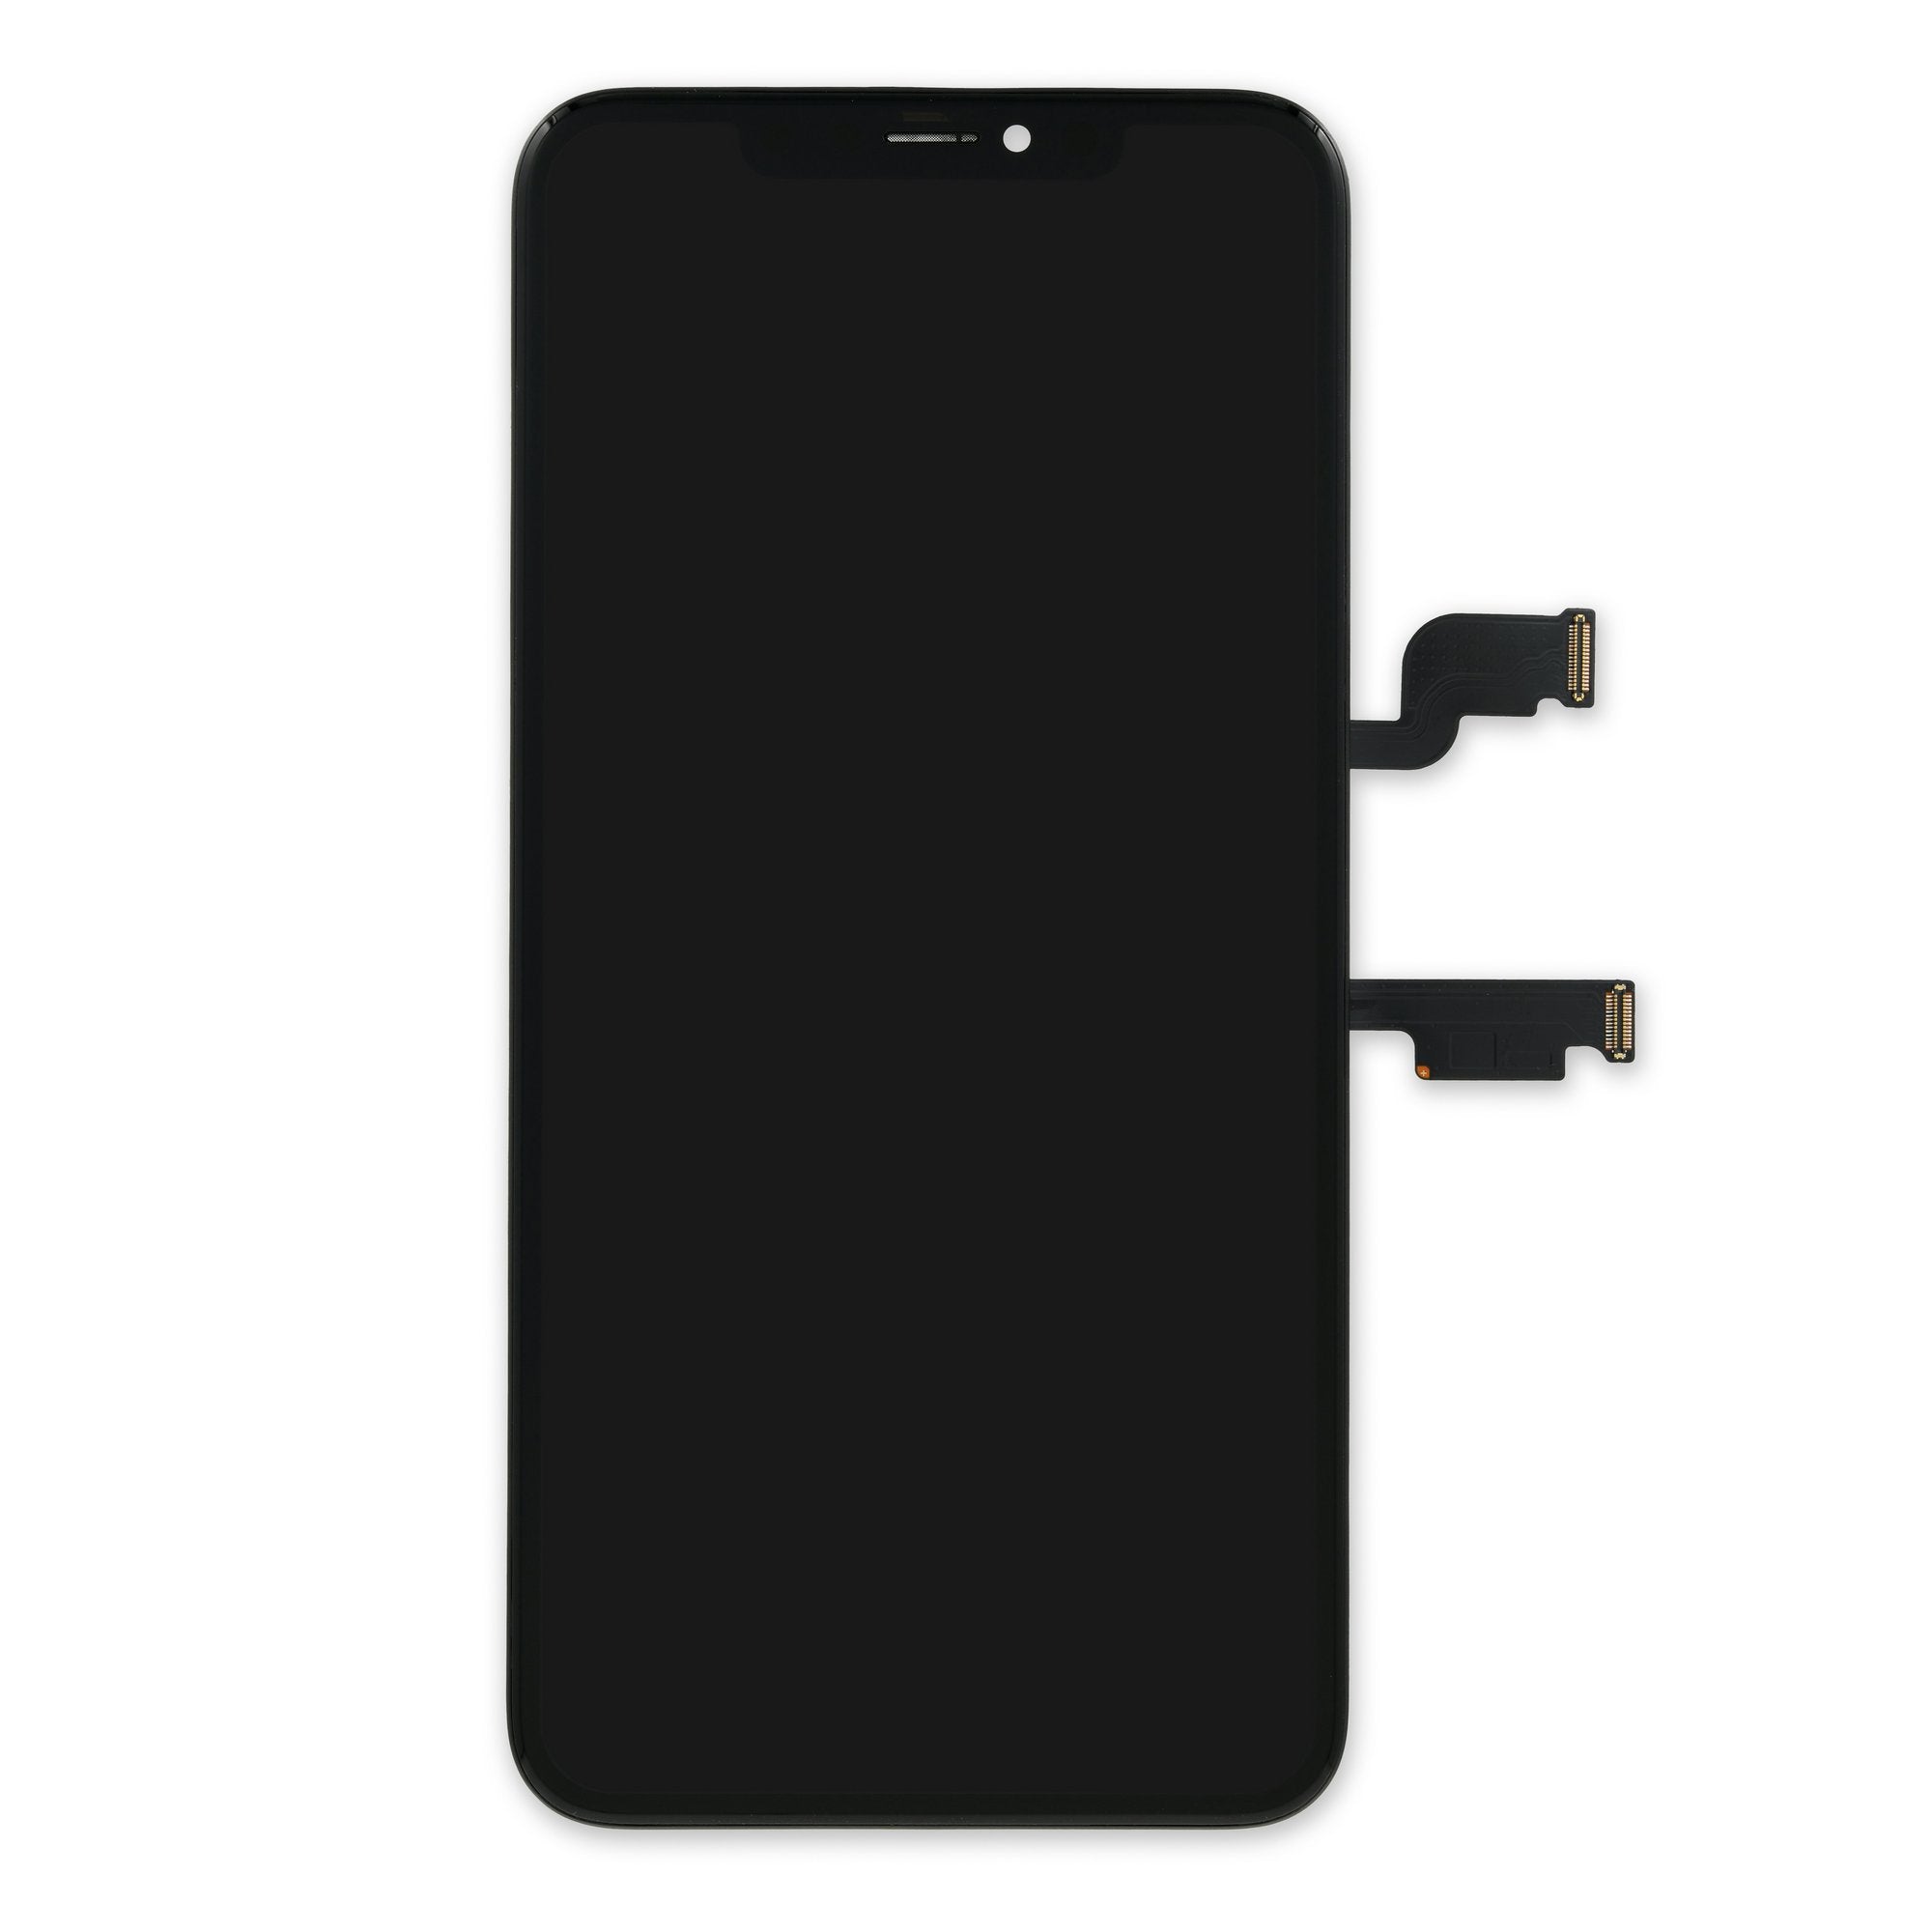 Écran soft OLED Tactile iPhone XS MAX A2101 Apple ORIGINAL Super Retina 6,5  in Vitre SmartPhone Affichage True Tone